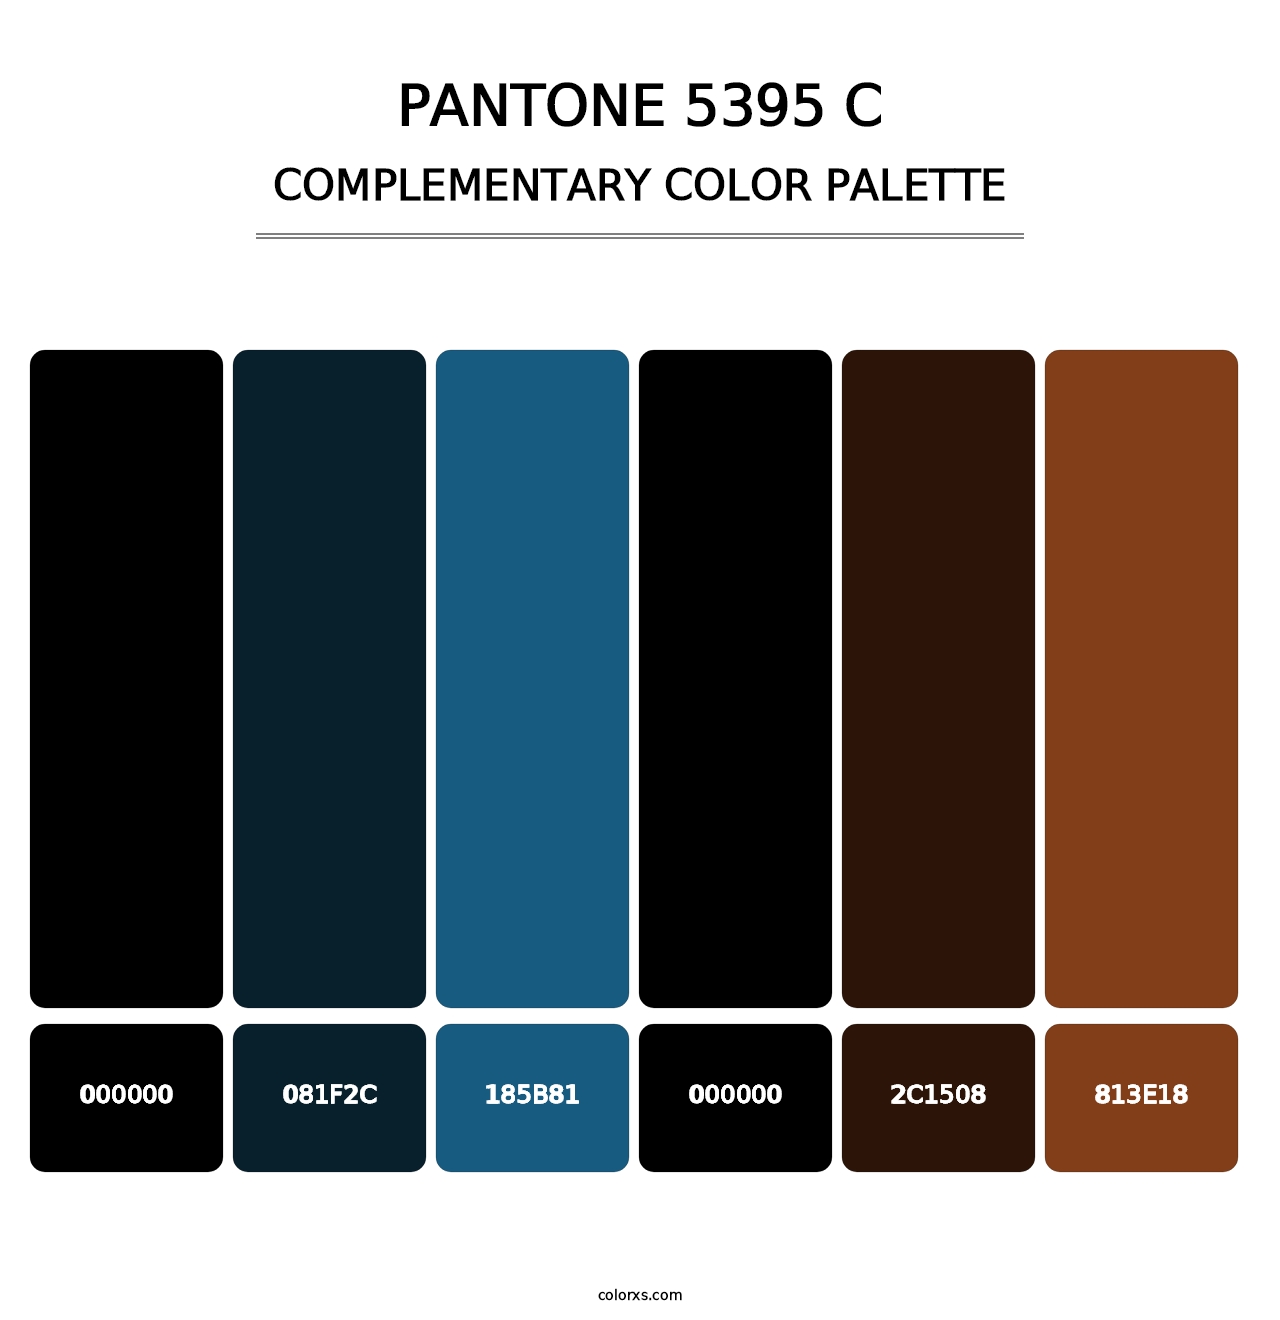 PANTONE 5395 C - Complementary Color Palette